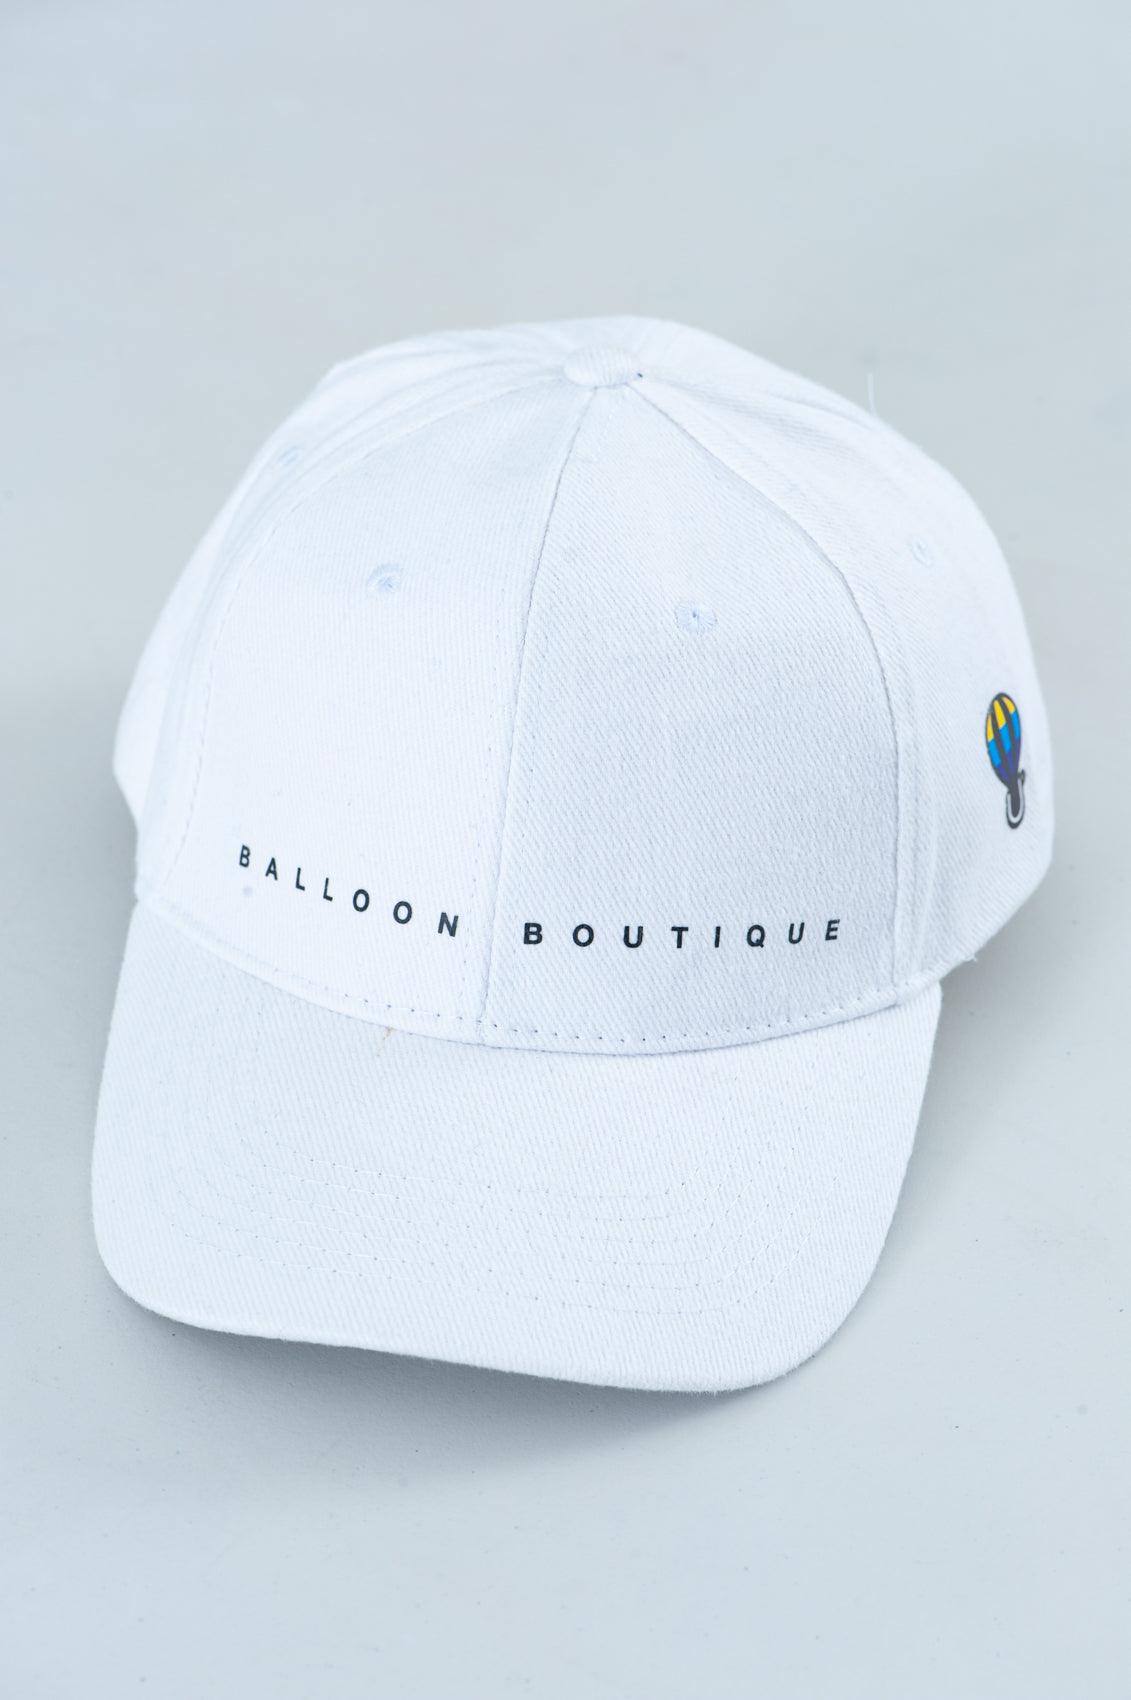 White Caps - Sky Amazons Boutique